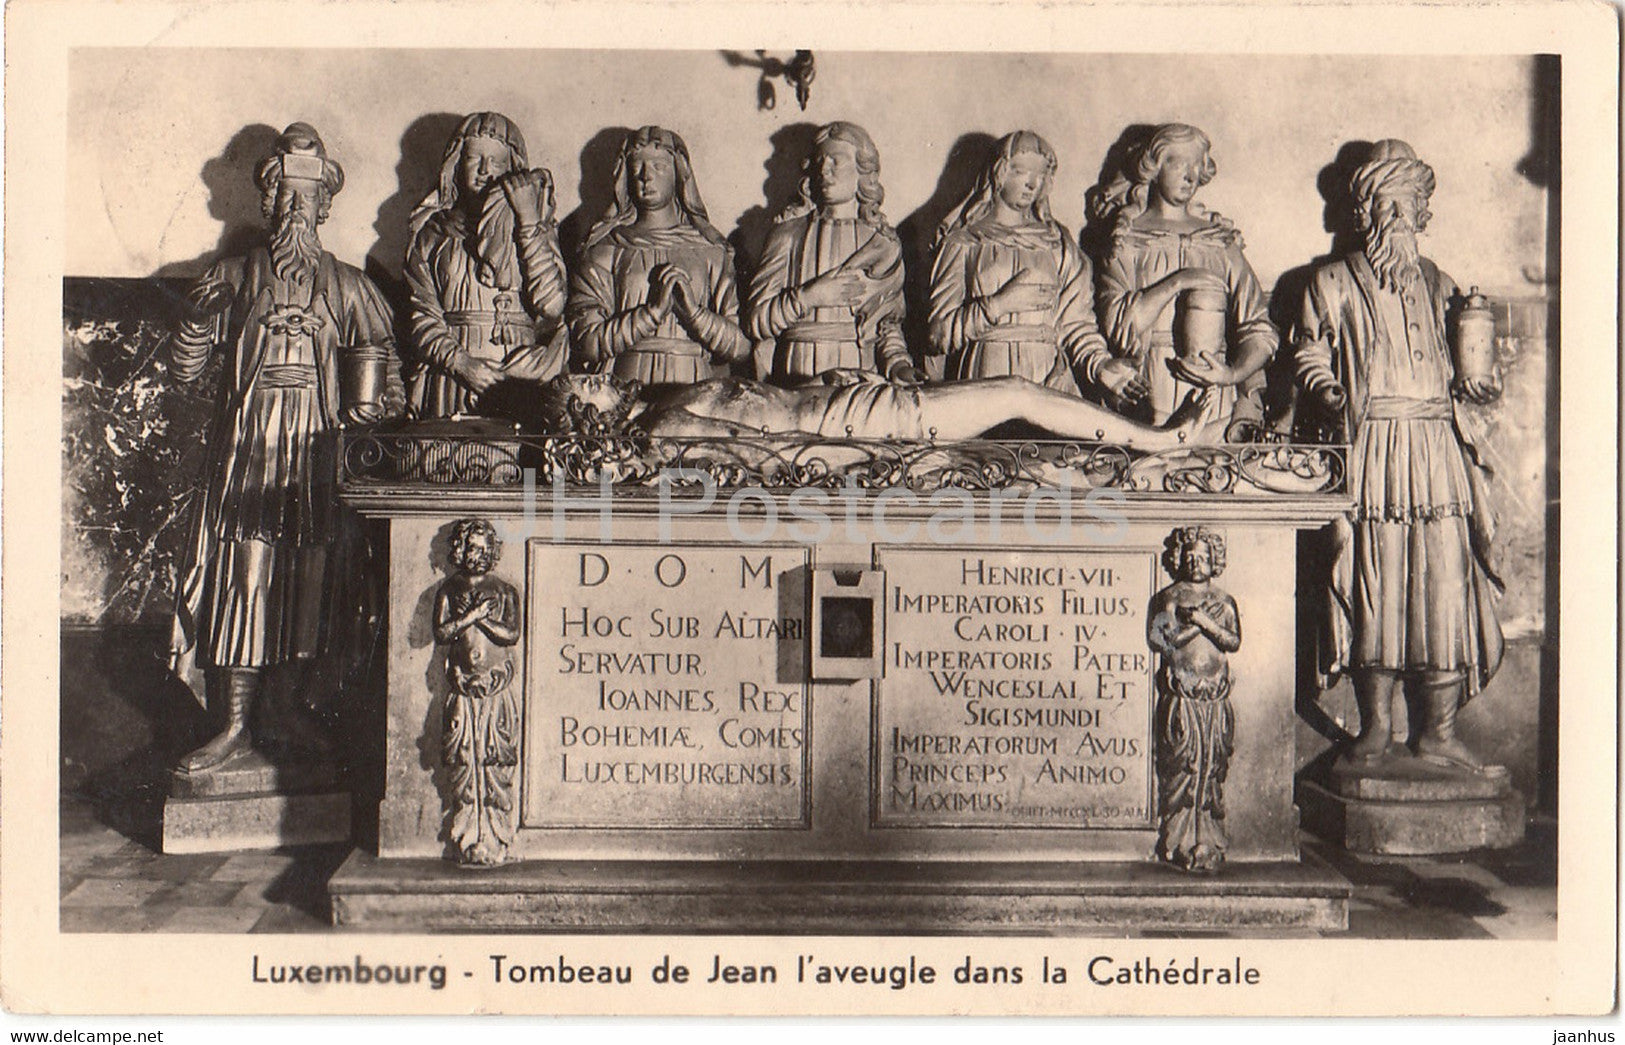 Luxembourg - Tombeau de Jean l'aveugle dans la Cathedrale - old postcard - Luxembourg - used - JH Postcards